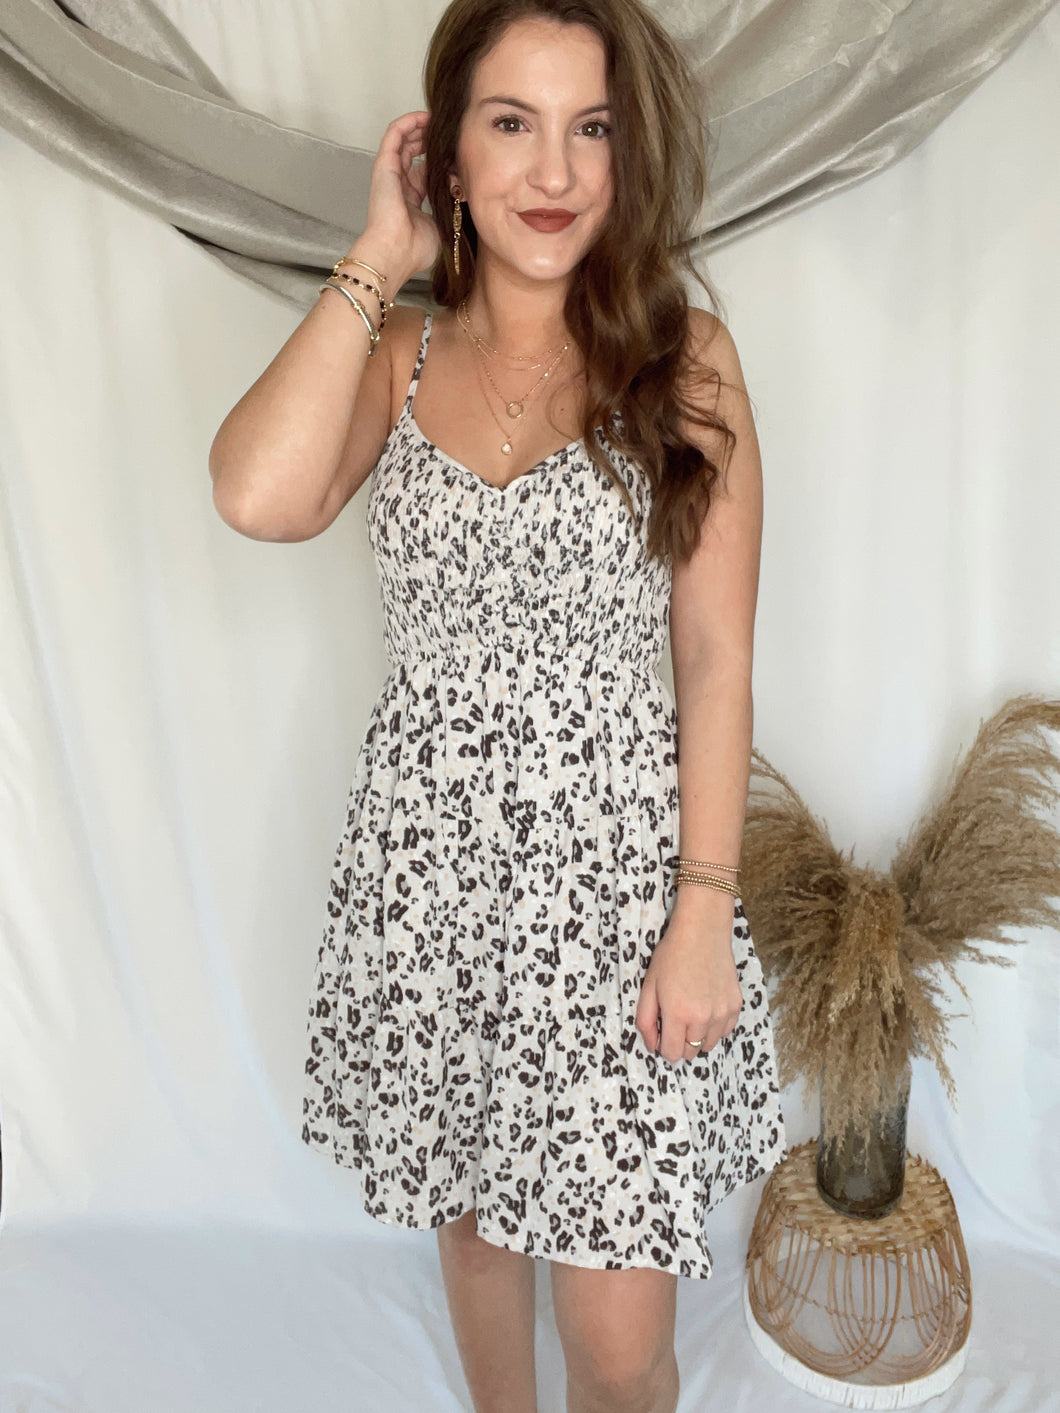 Christina Leopard Dress